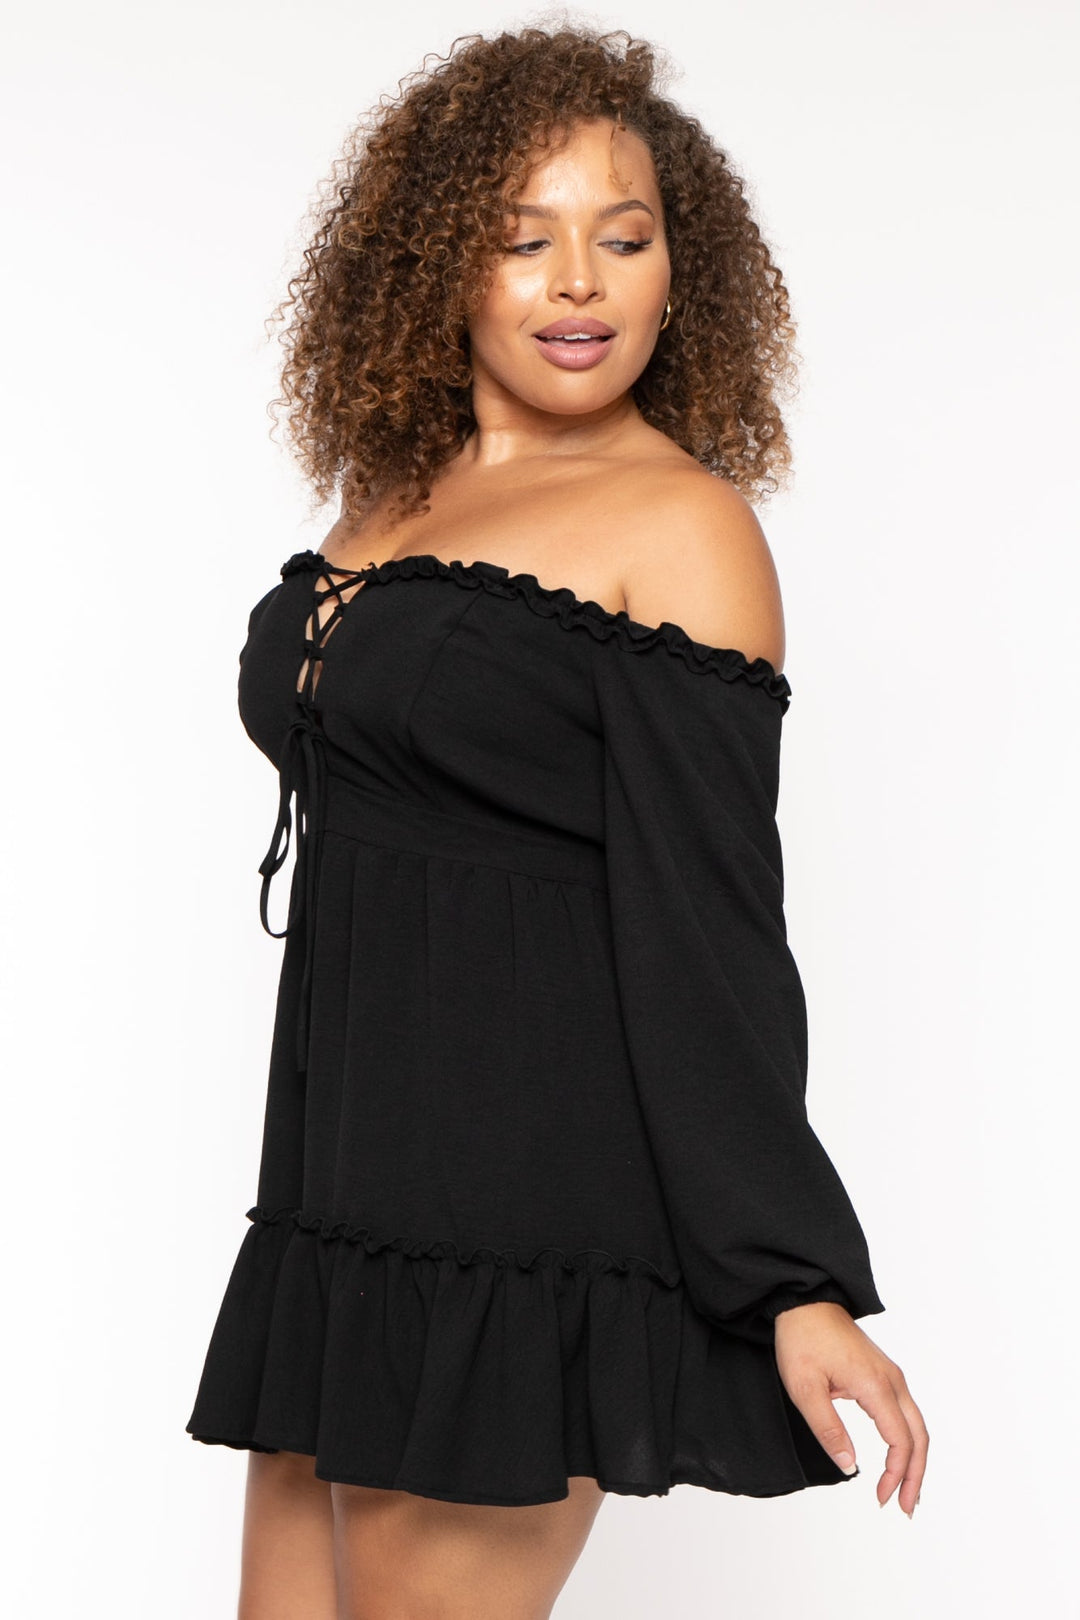 Curvy Sense Dresses Plus Size Adellia Lace Up Ruffle Dress- Black